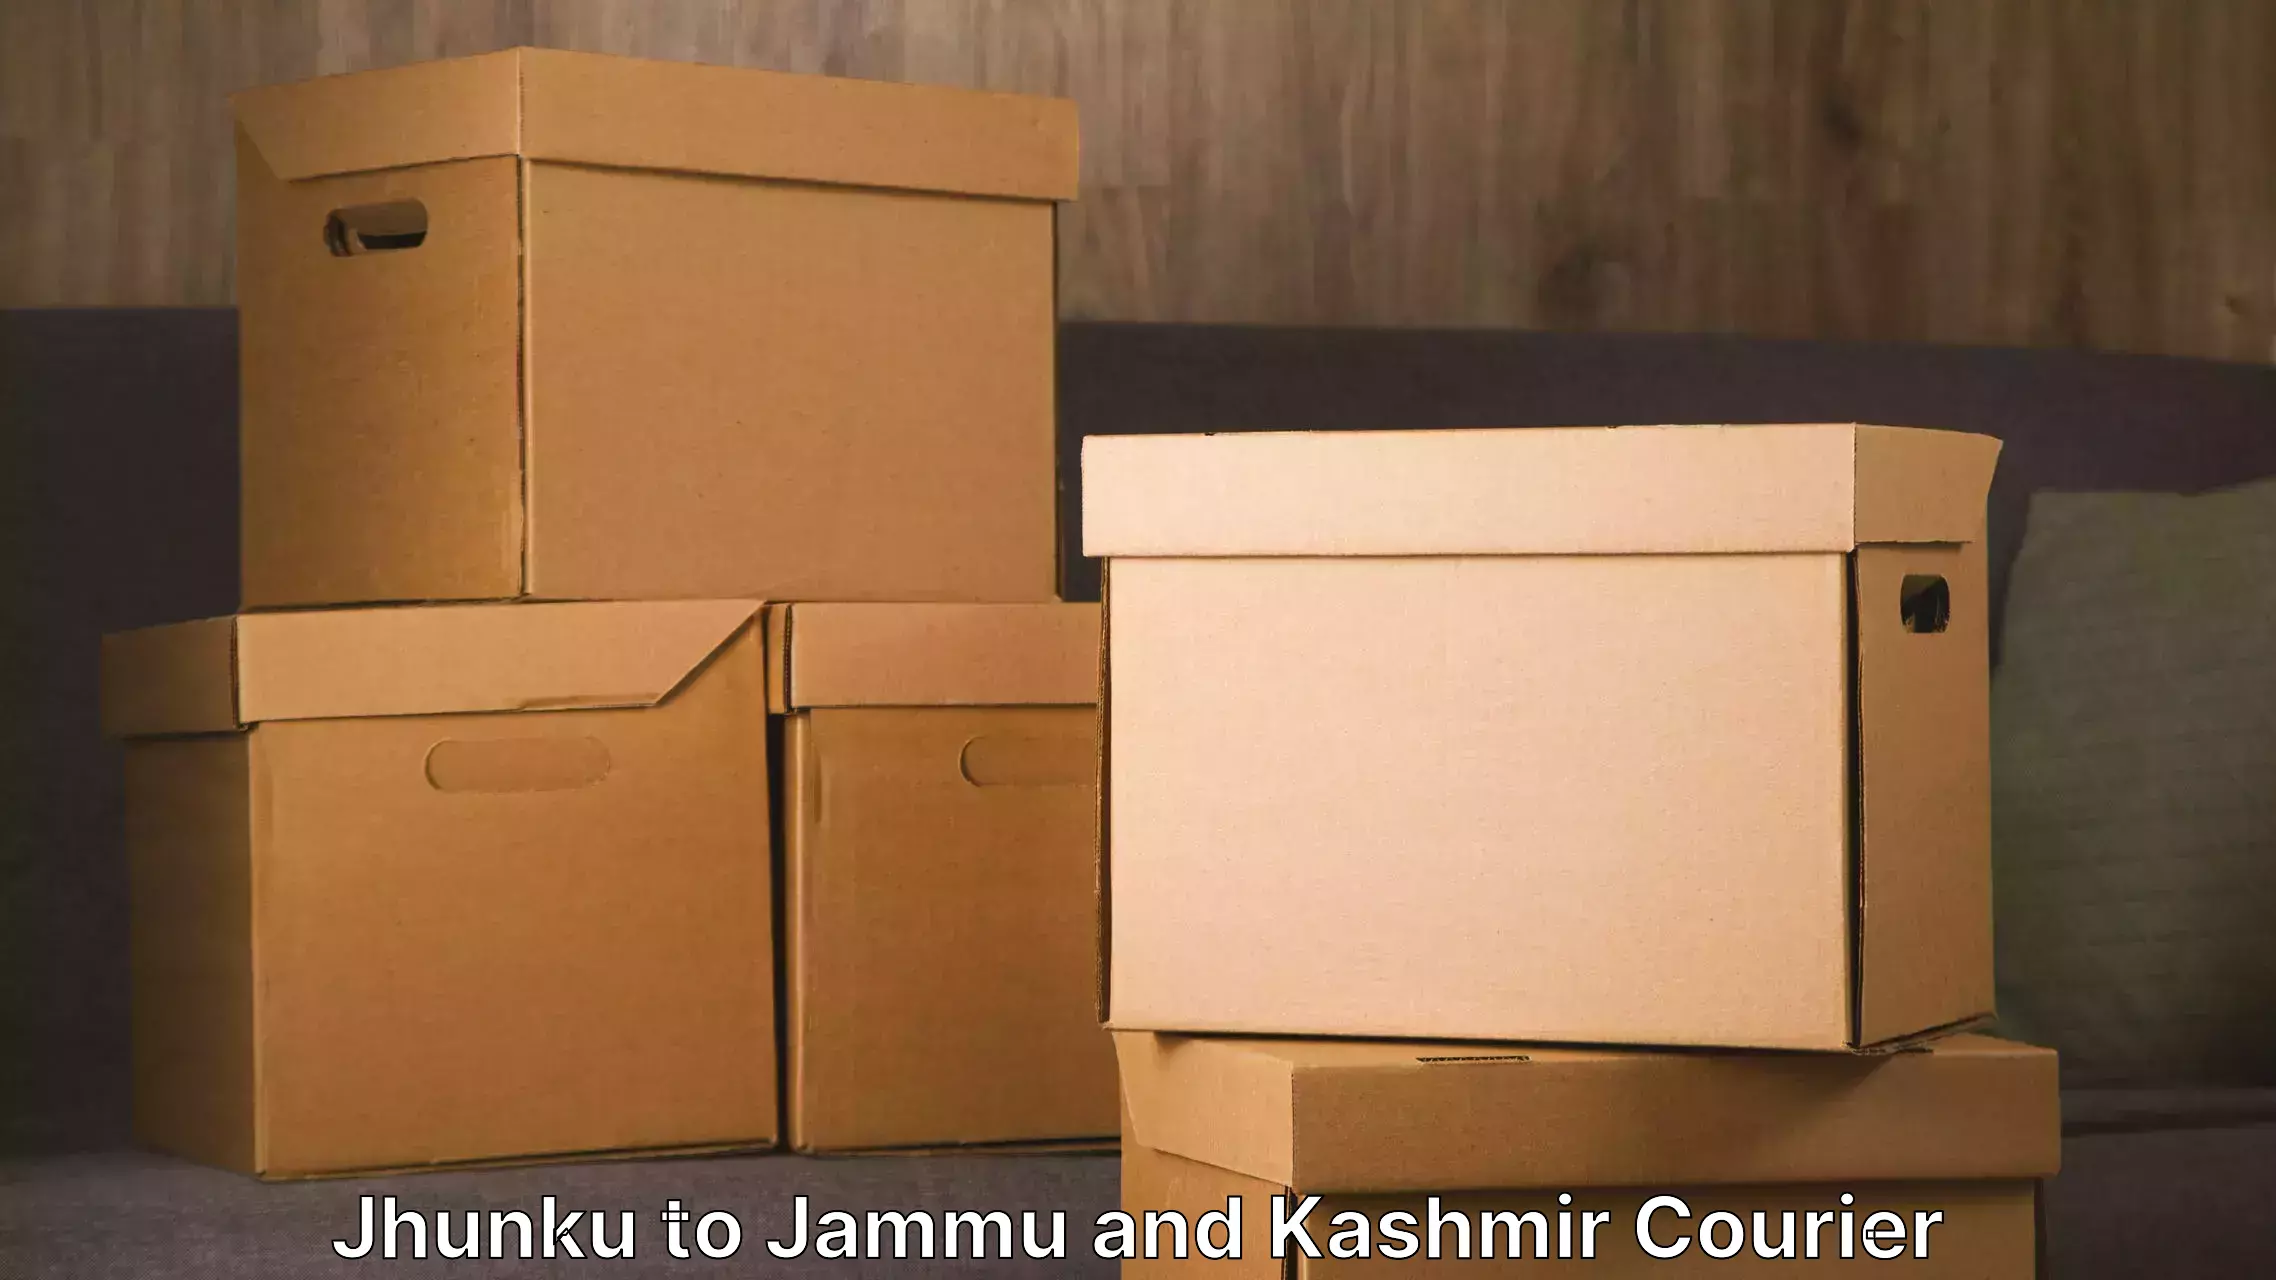 Residential moving experts Jhunku to Sunderbani